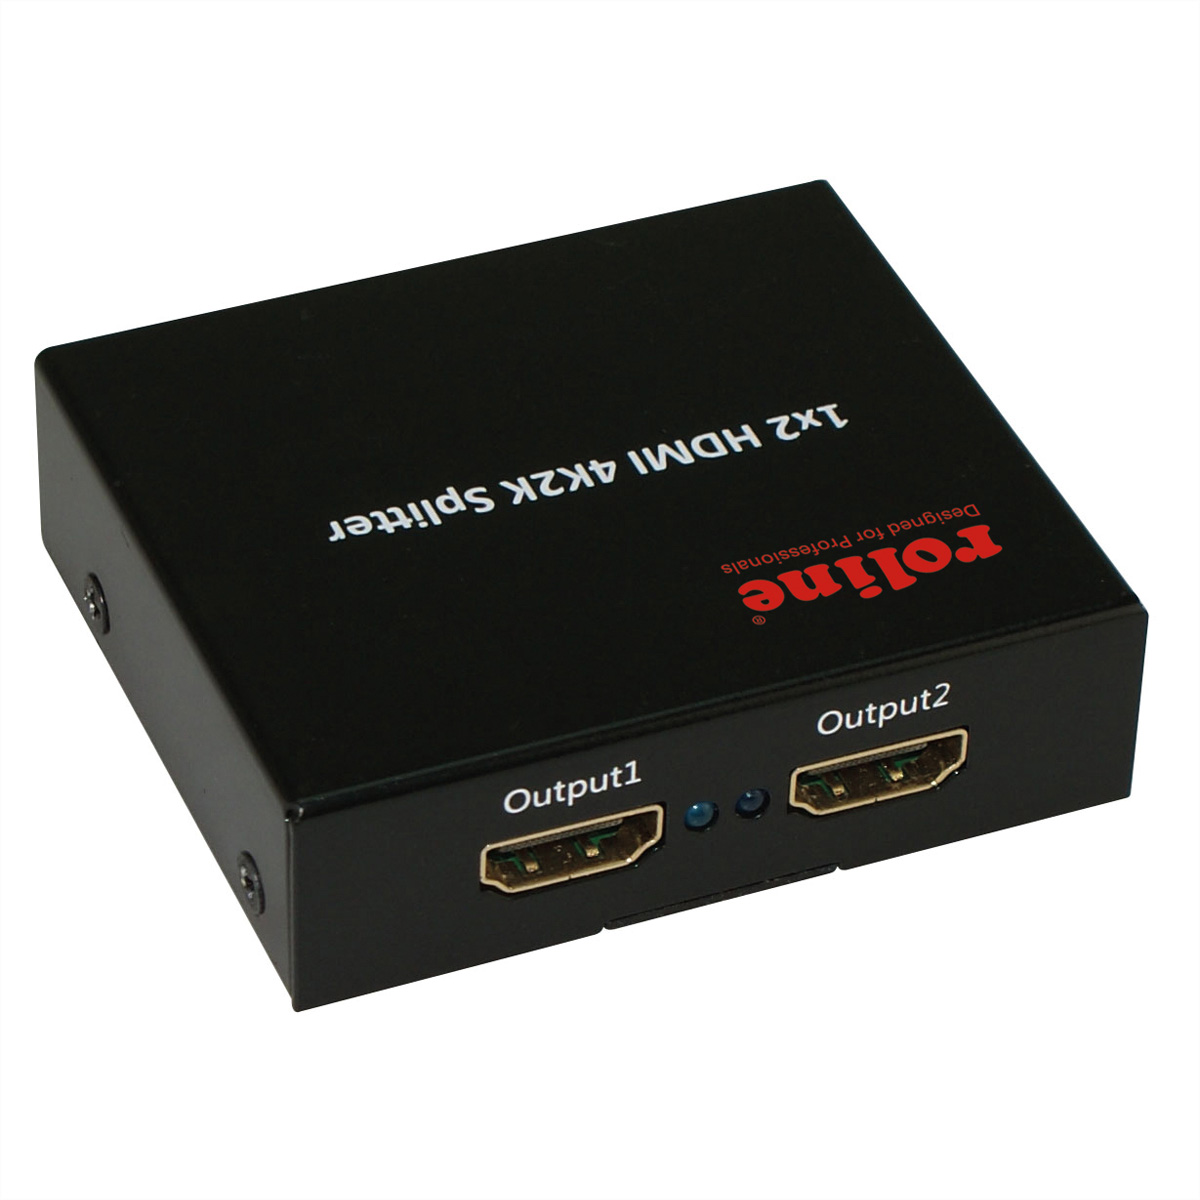 2fach ROLINE HDMI Video-Splitter, HDMI-Video-Splitter